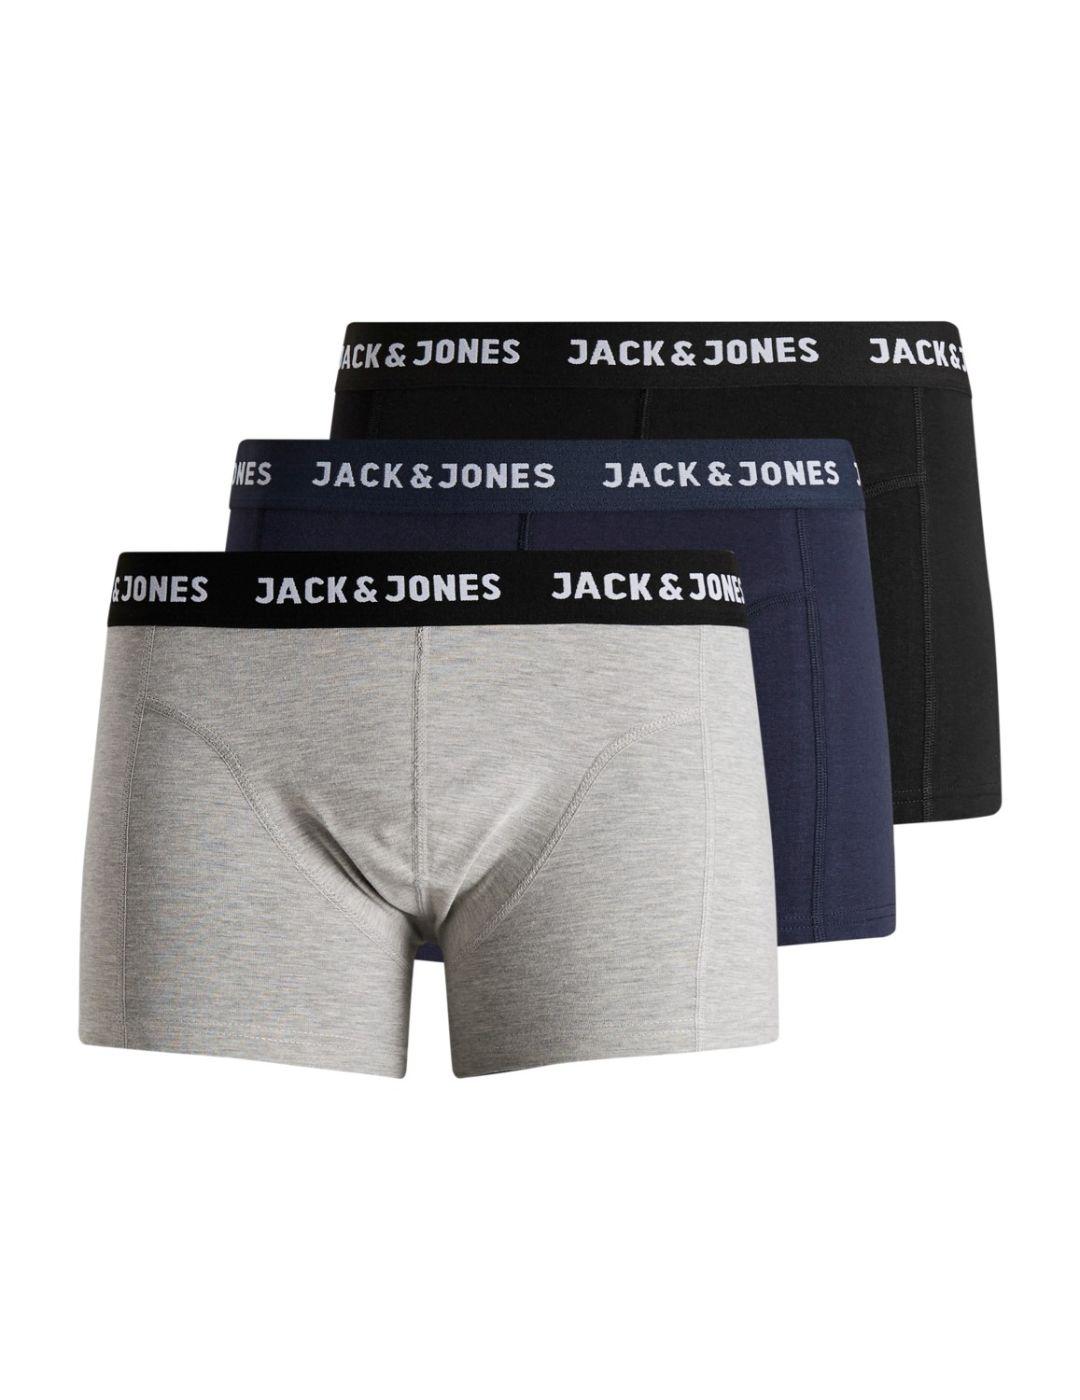 Jack & Jones Mens Boxer Shorts 